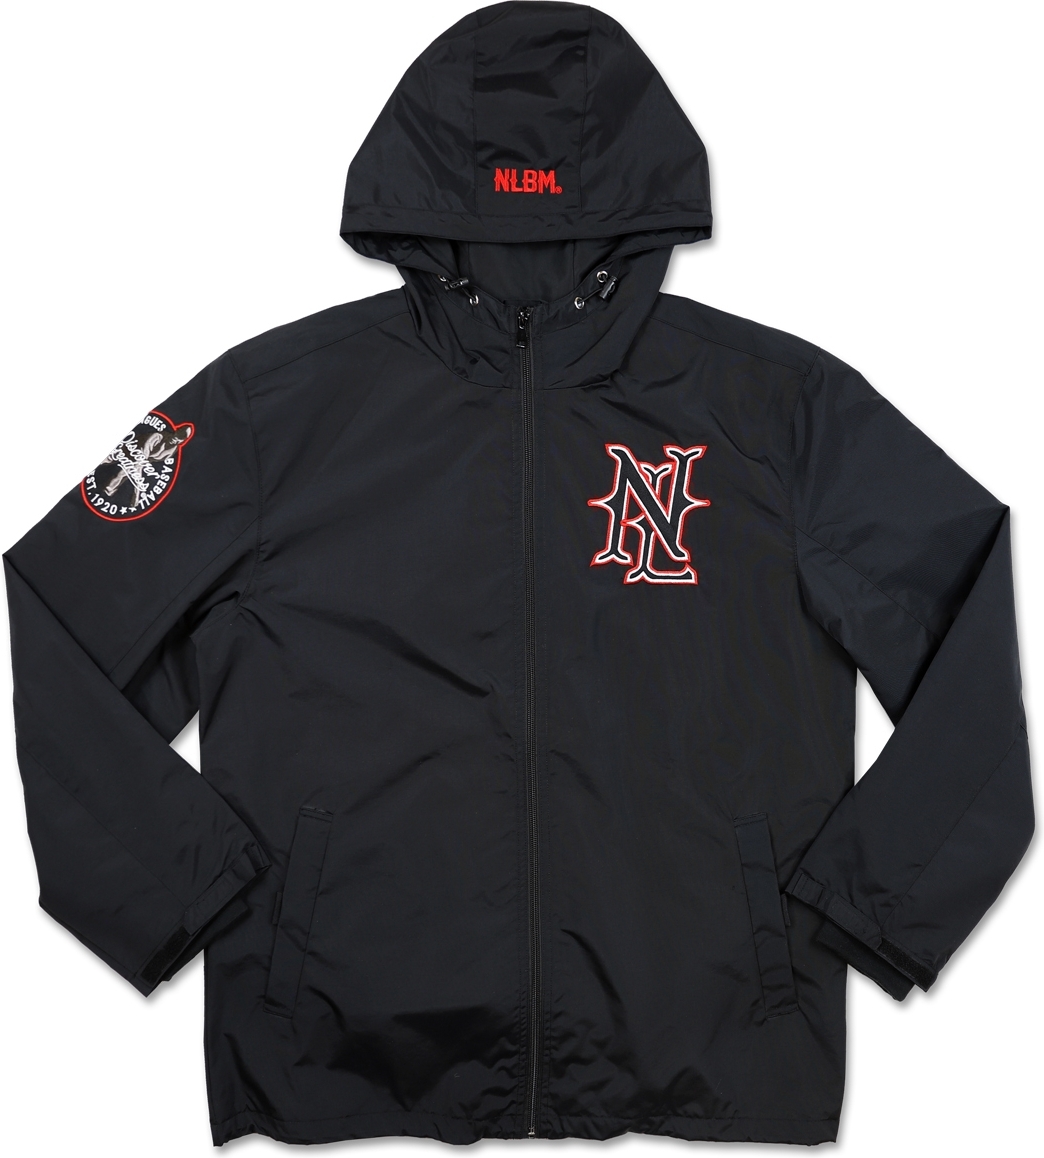 Maker of Jacket Varsity Jackets NLBM New York Black Yankees Baseball